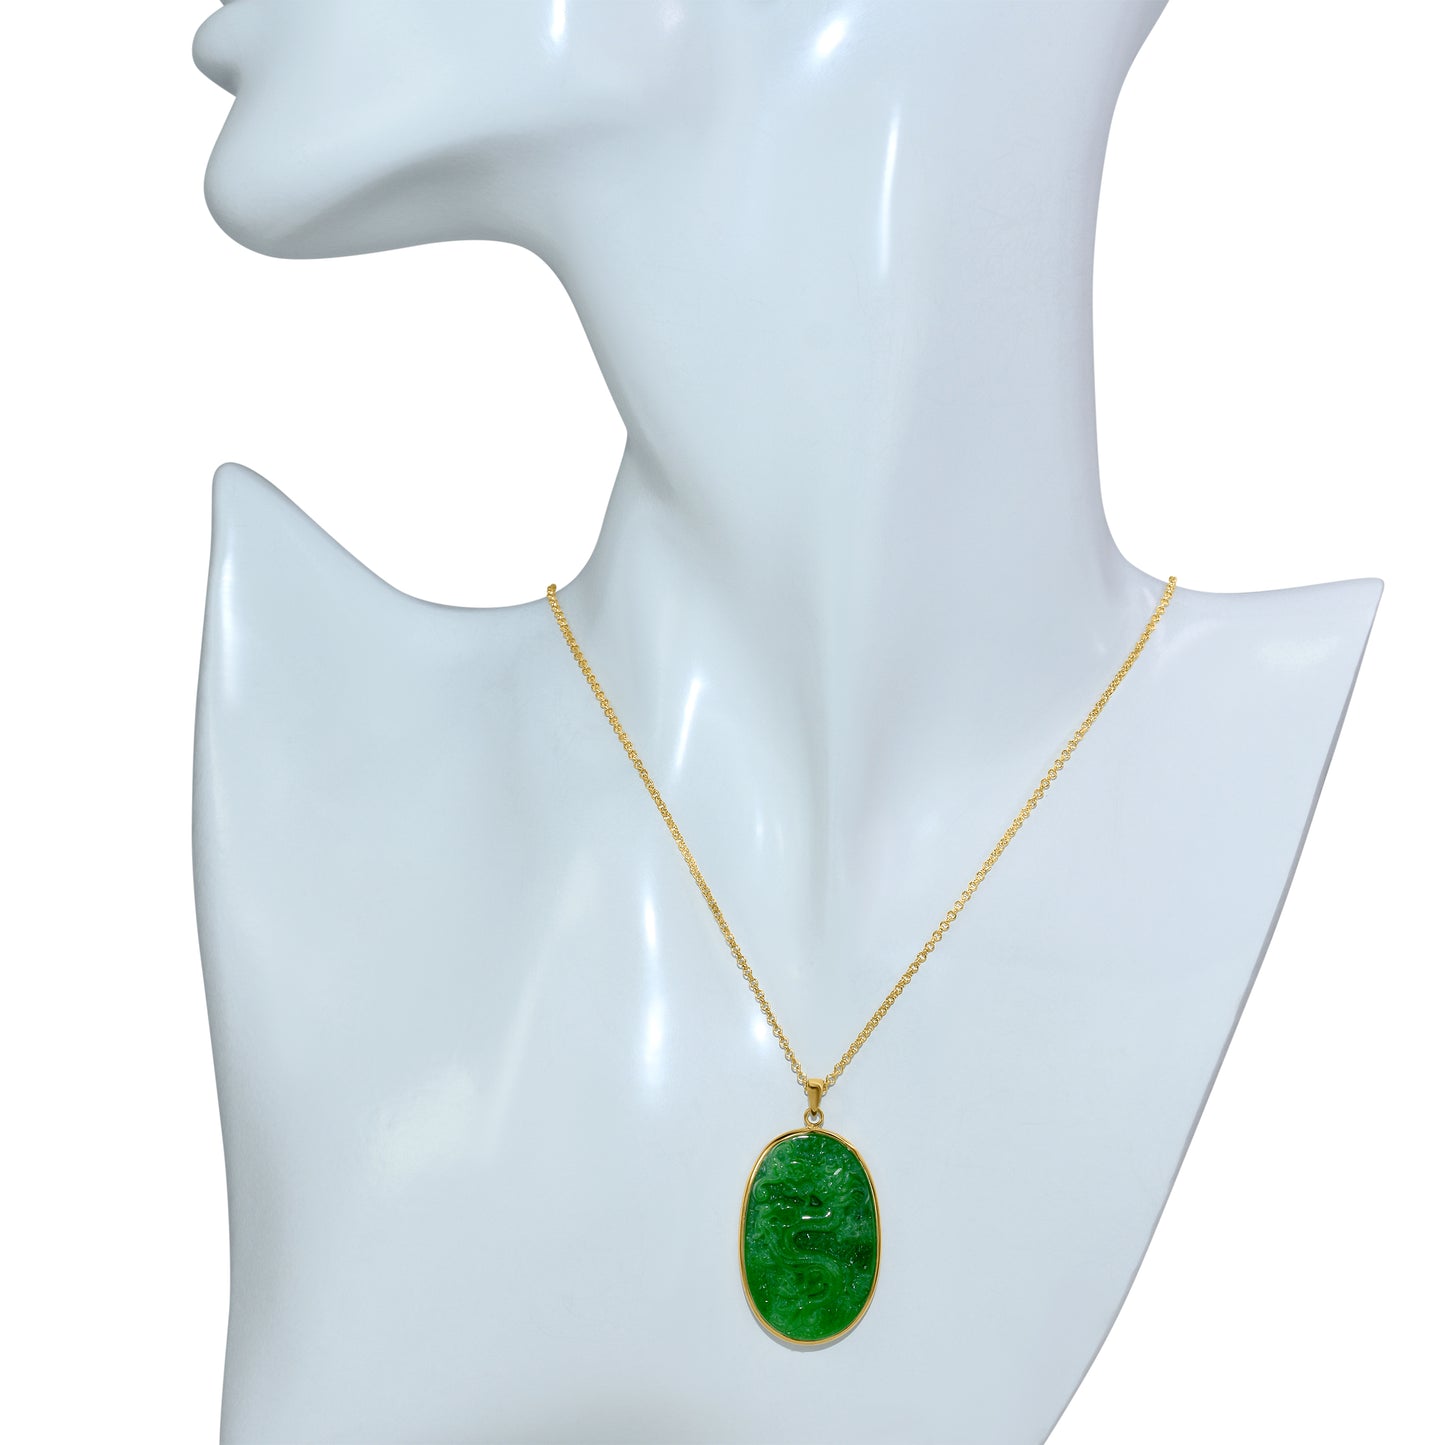 14k Green Jade Carved Dragon Oval Pendant Necklace 17"